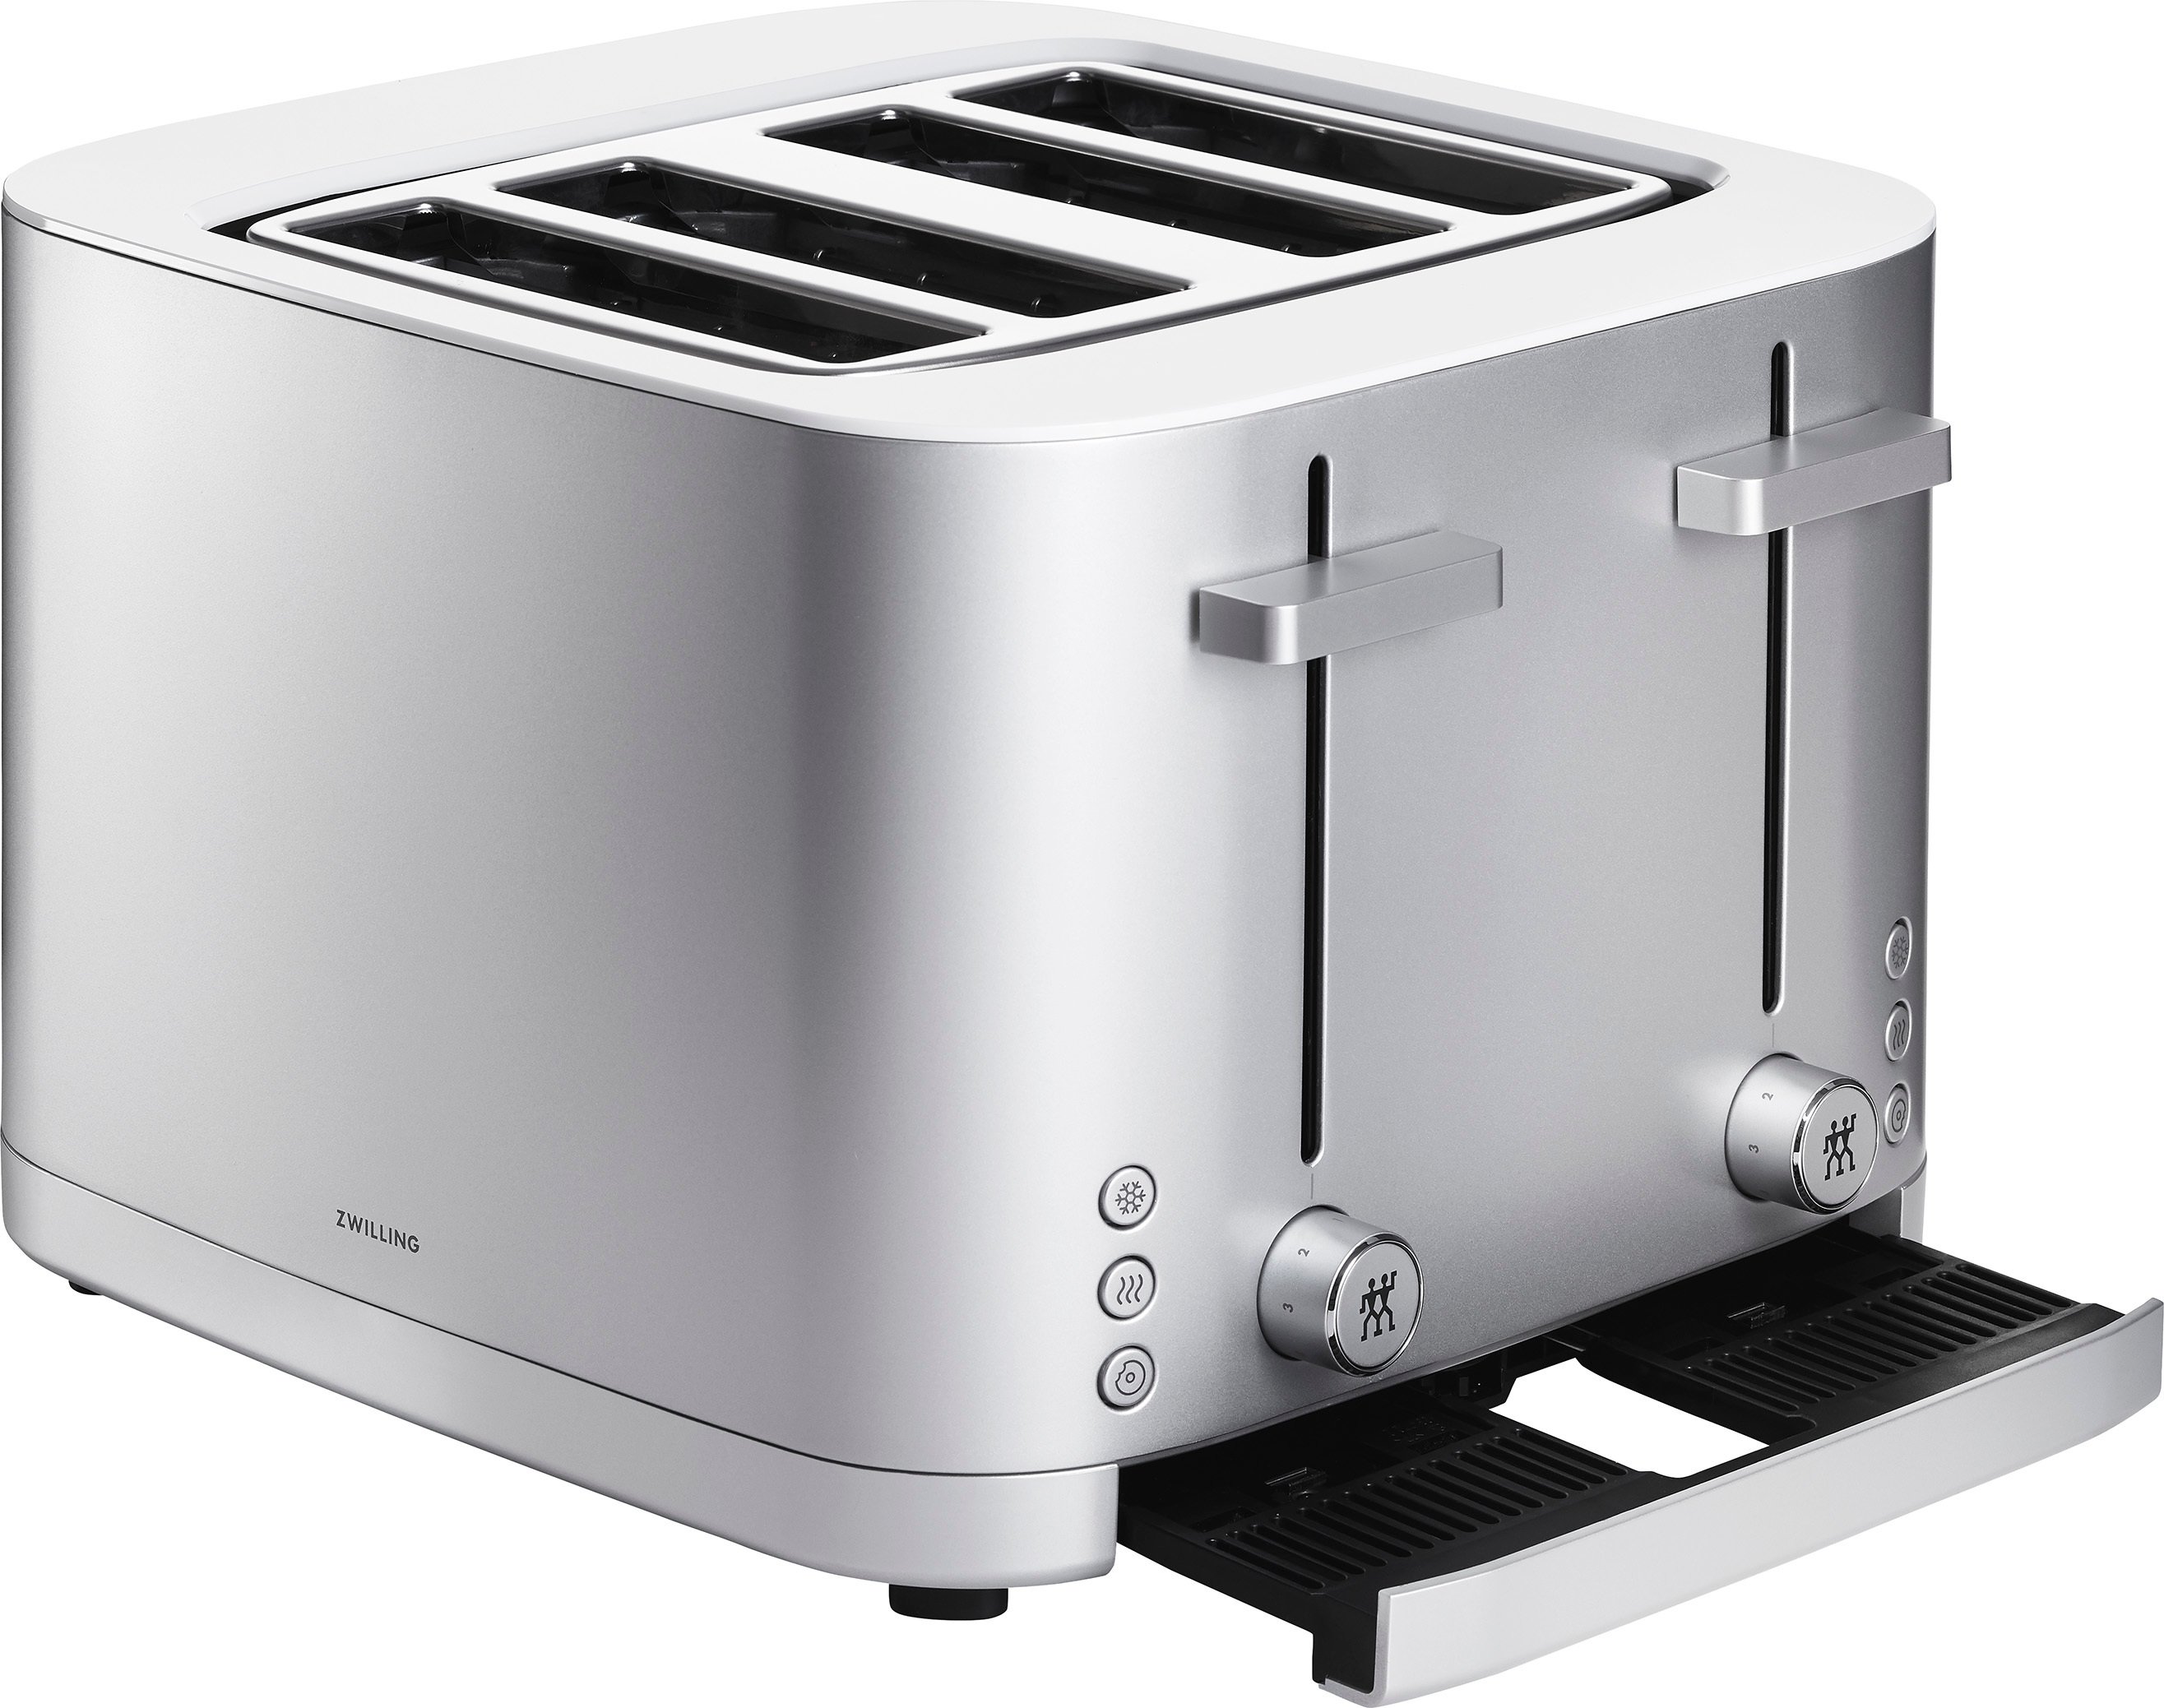 https://www.zwilling.com/on/demandware.static/-/Sites-zwilling-us-Library/default/dwffa9156f/images/product-content/product-specific-images/zwilling-enfinigy-hotspot-modules/electrics-pdp-hotspot-4-toaster.jpg